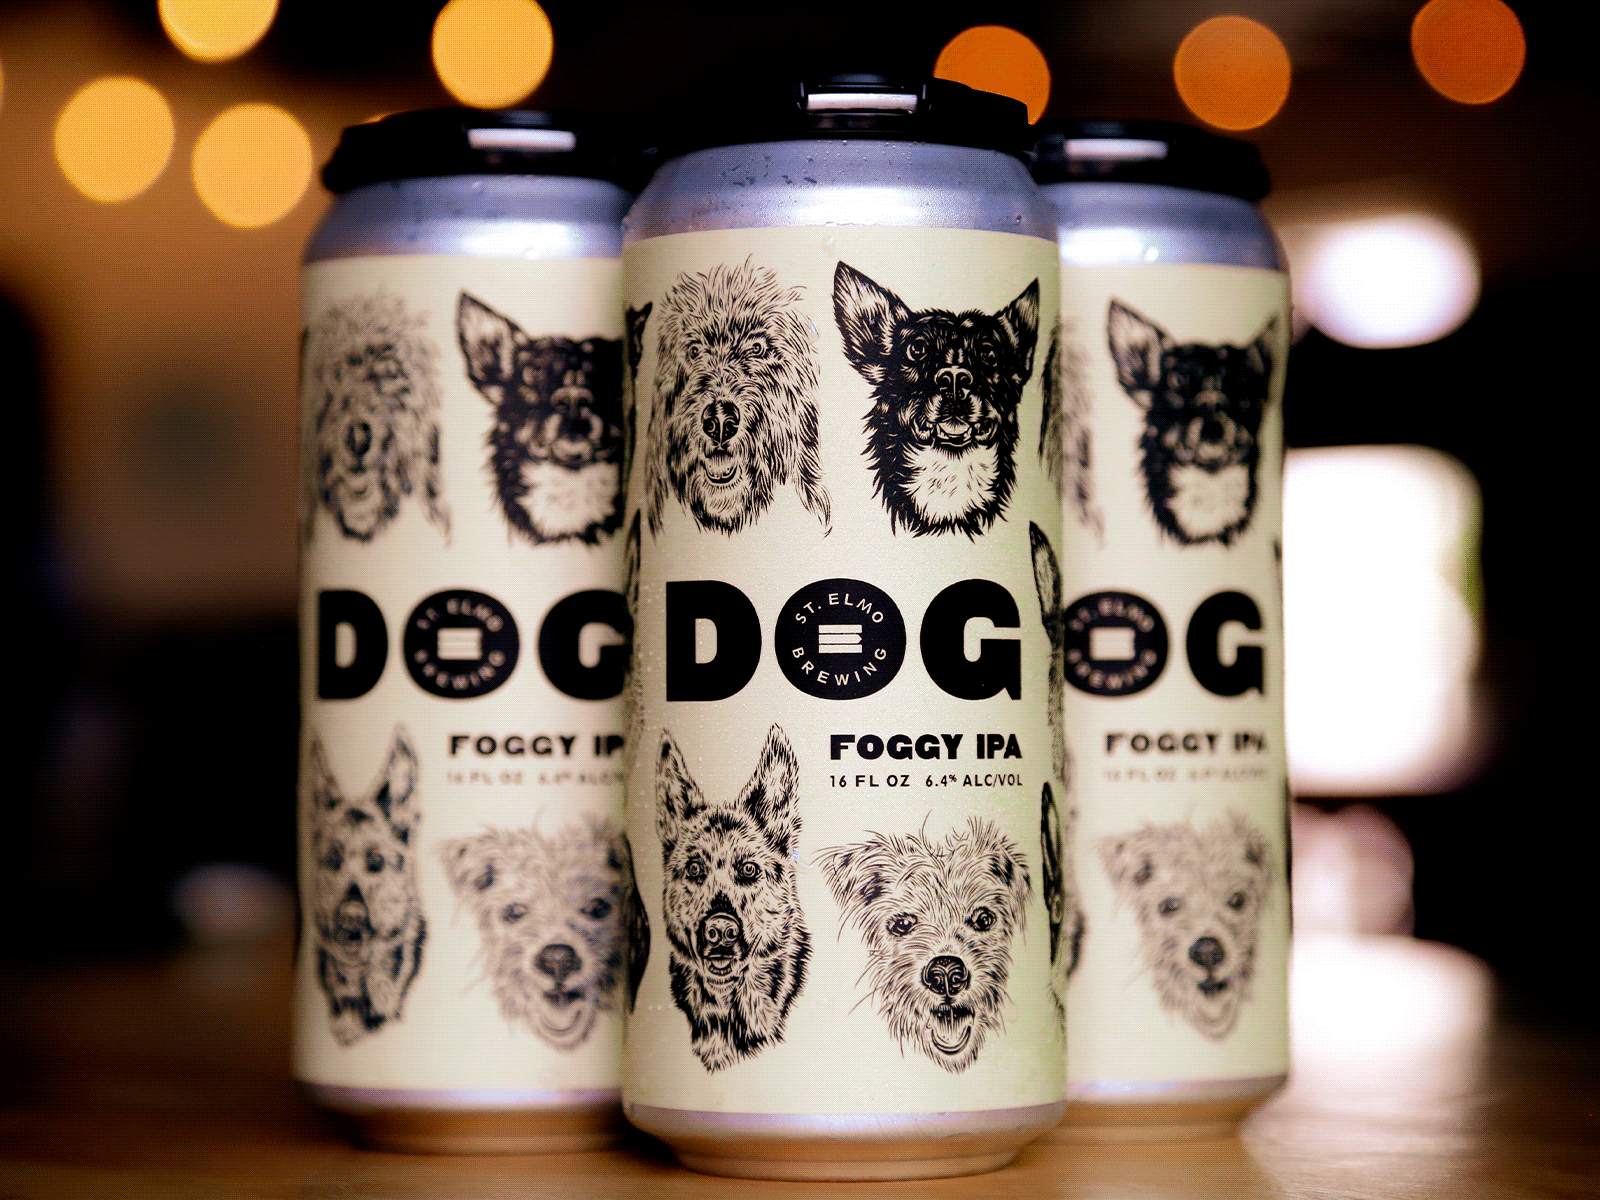 St. ELMO DOG Foggy IPA austin texas craft beer dog dog portrait foggy ipa illustration label design packaging st elmo brewing company